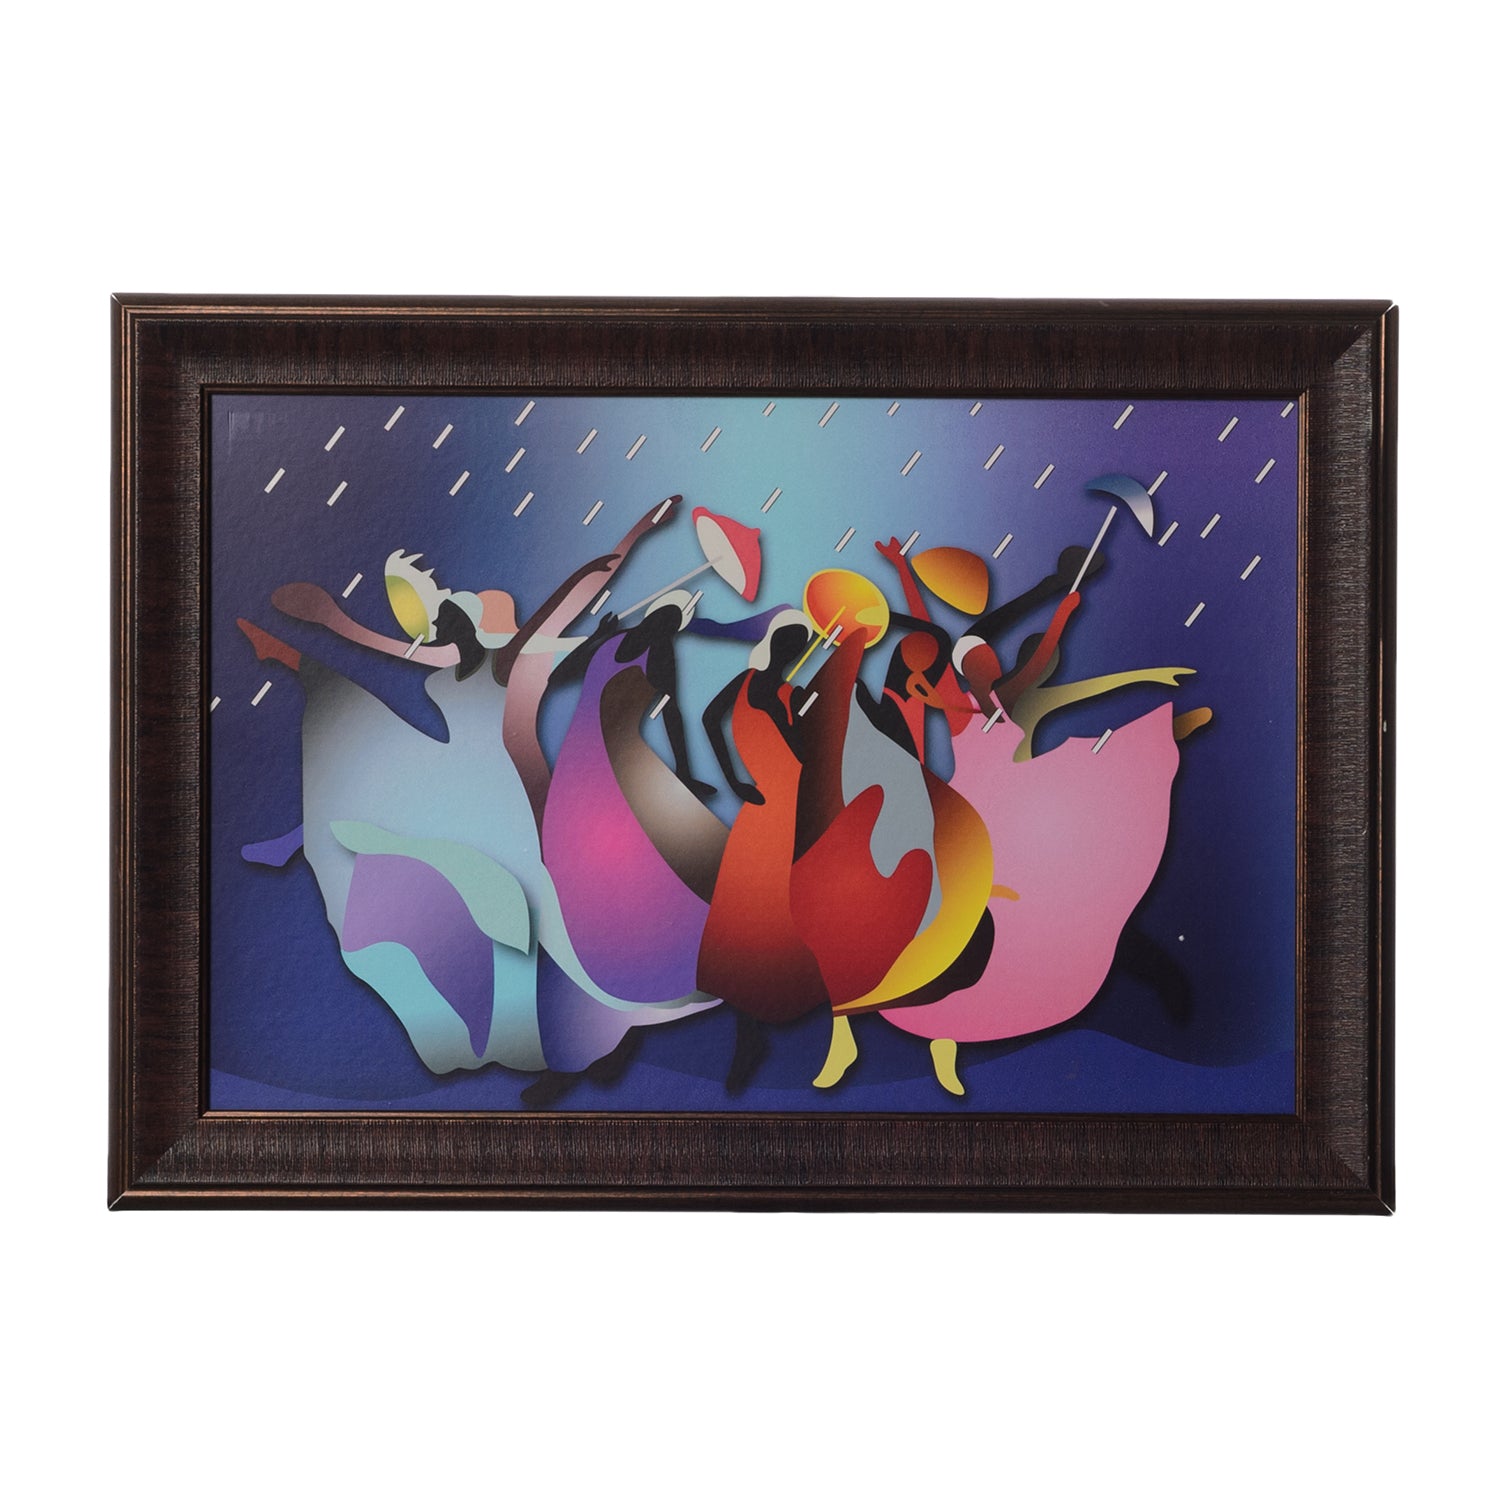 Colorful Dancing Girls in Rain Satin Matt Texture UV Art Painting